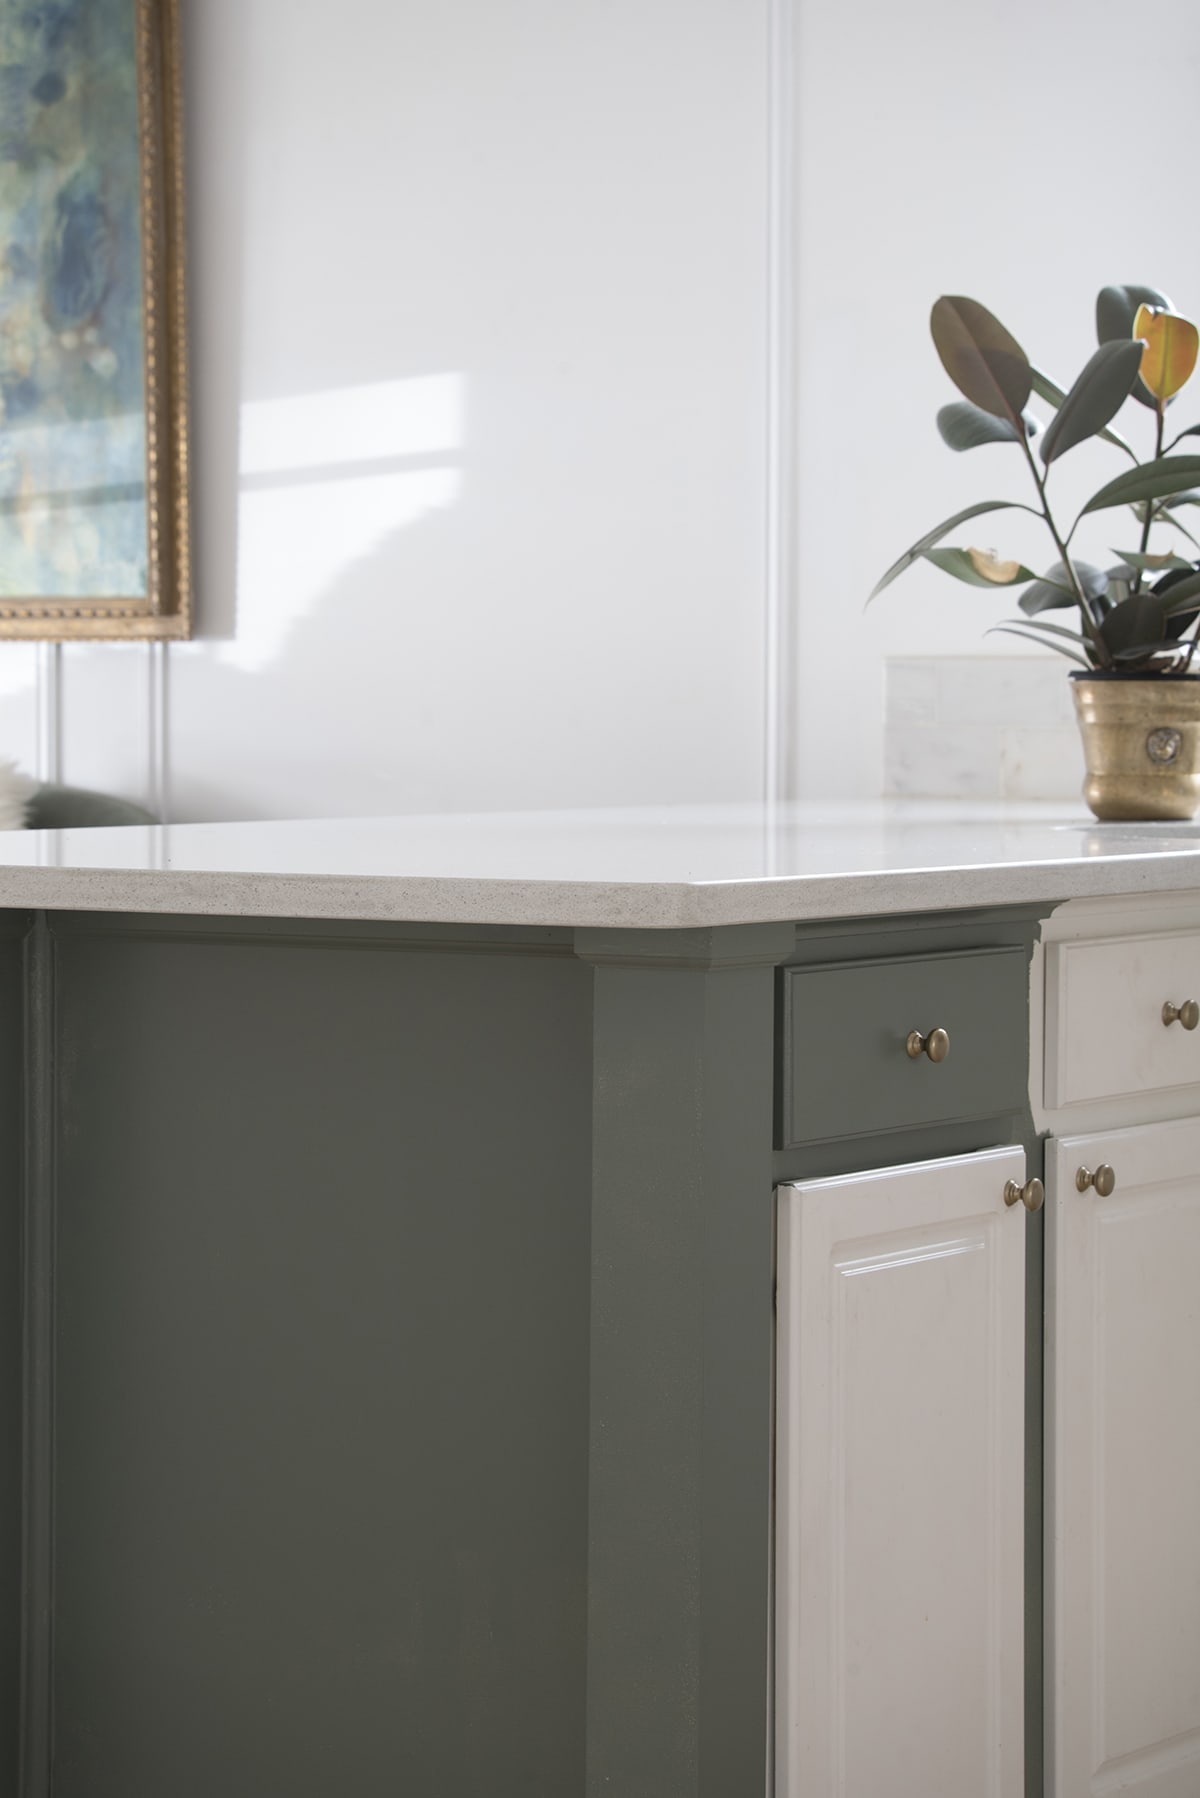 painting laminate kitchen cabinet for budget kitchen updates